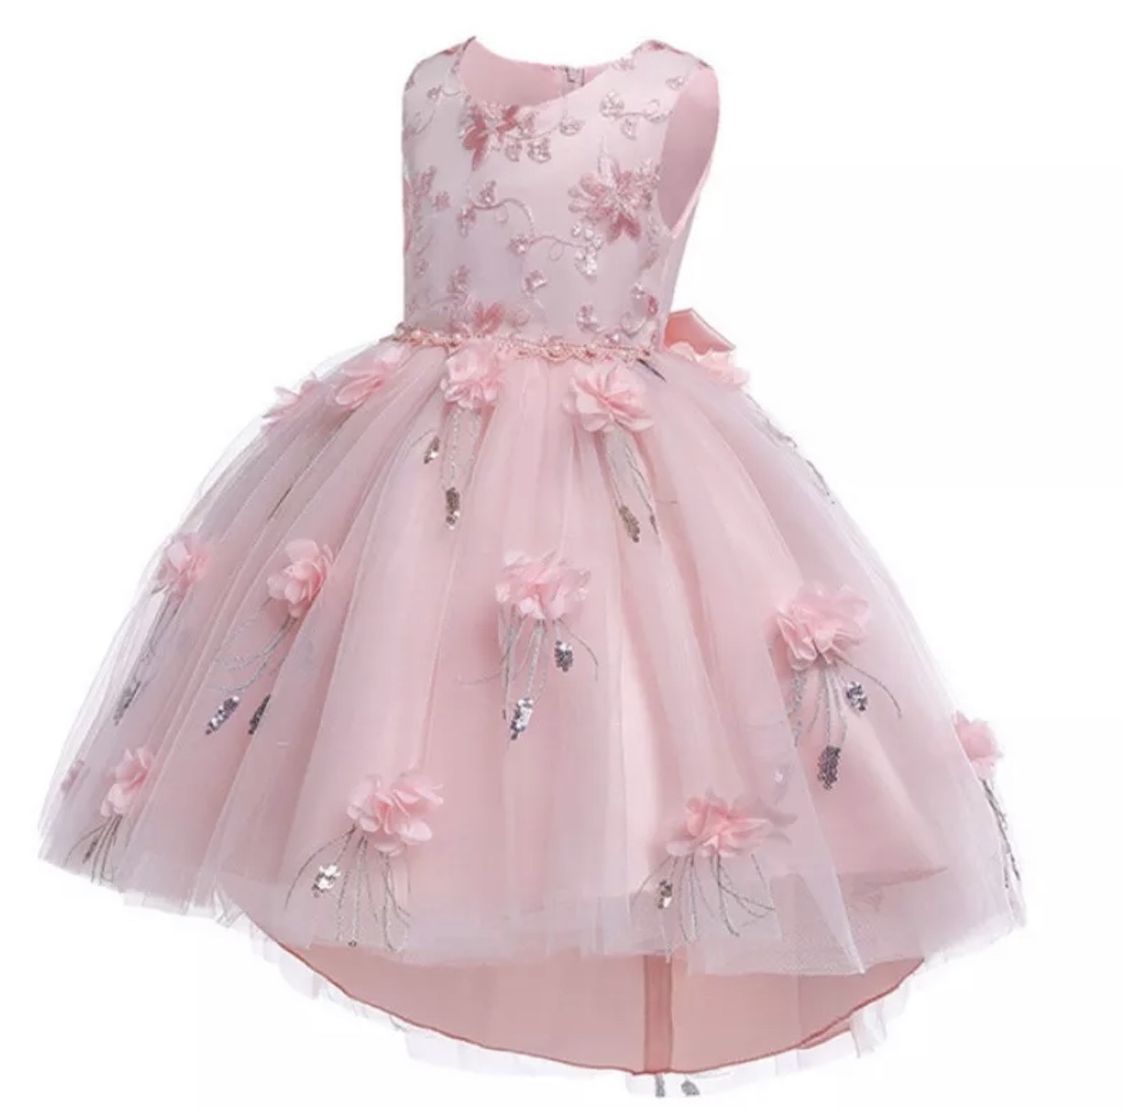 Brand New, Never Worn gorgeous pink princess dress, toddler size 4T